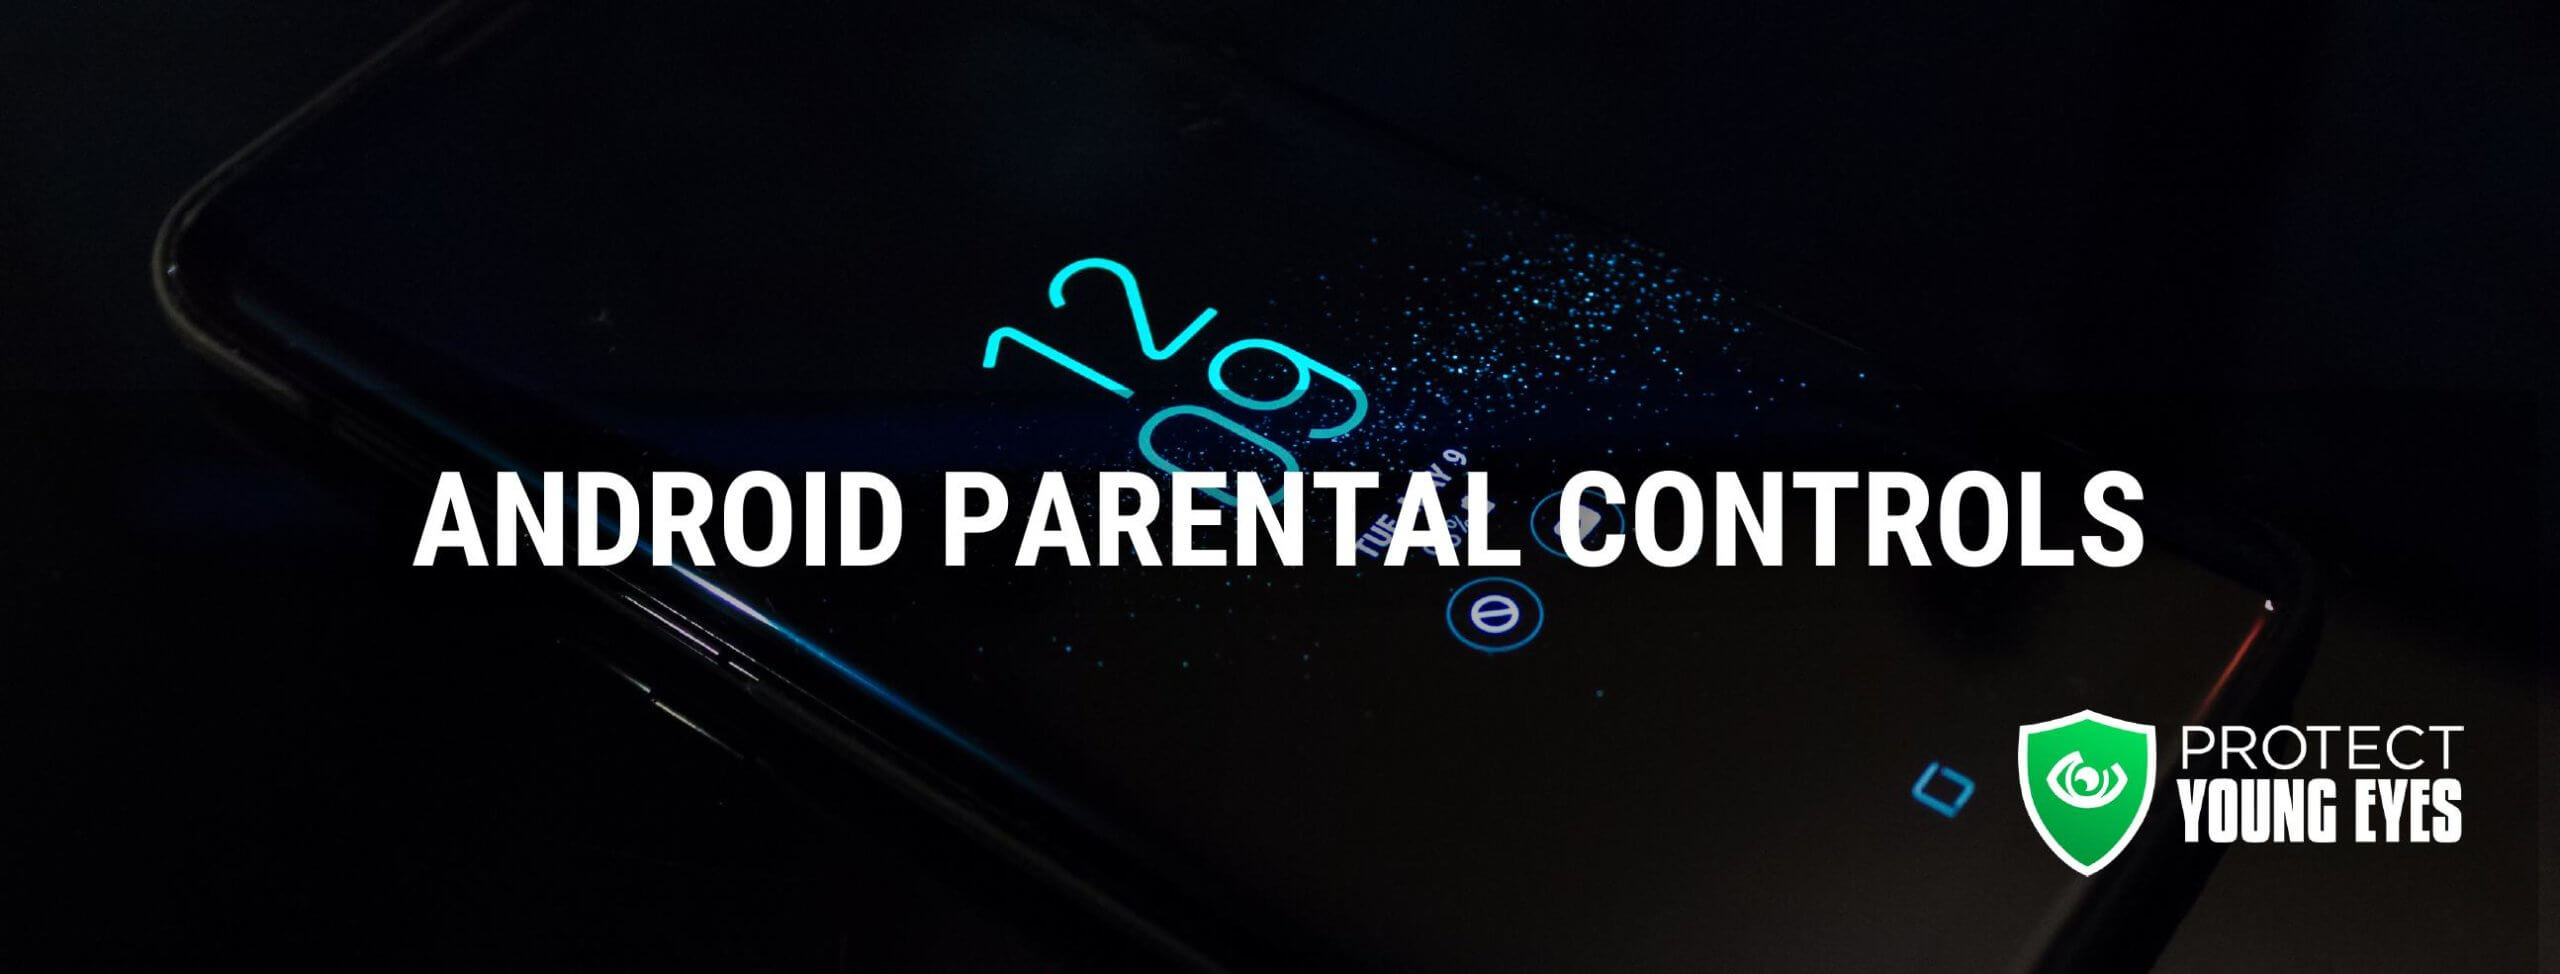 Android Parental Controls PYE